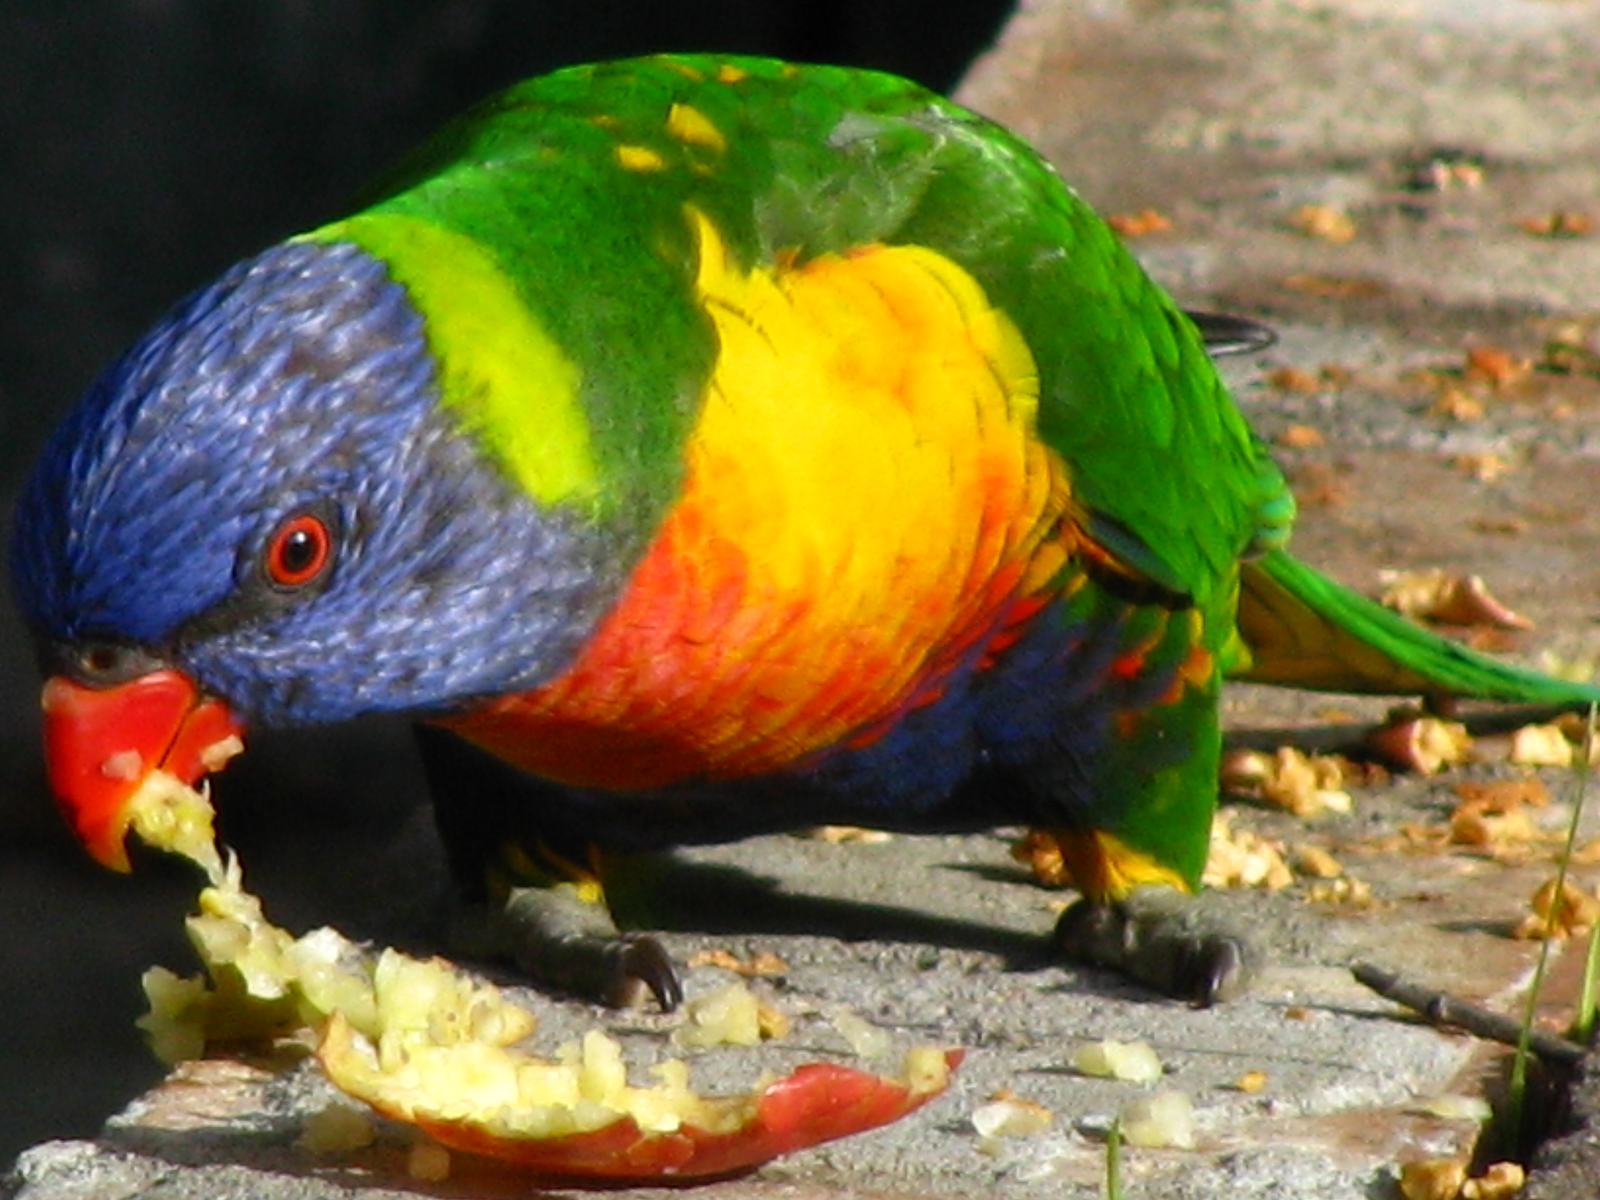 Parrot eating an apple, Apple, Australian, Bird, Eating, HQ Photo